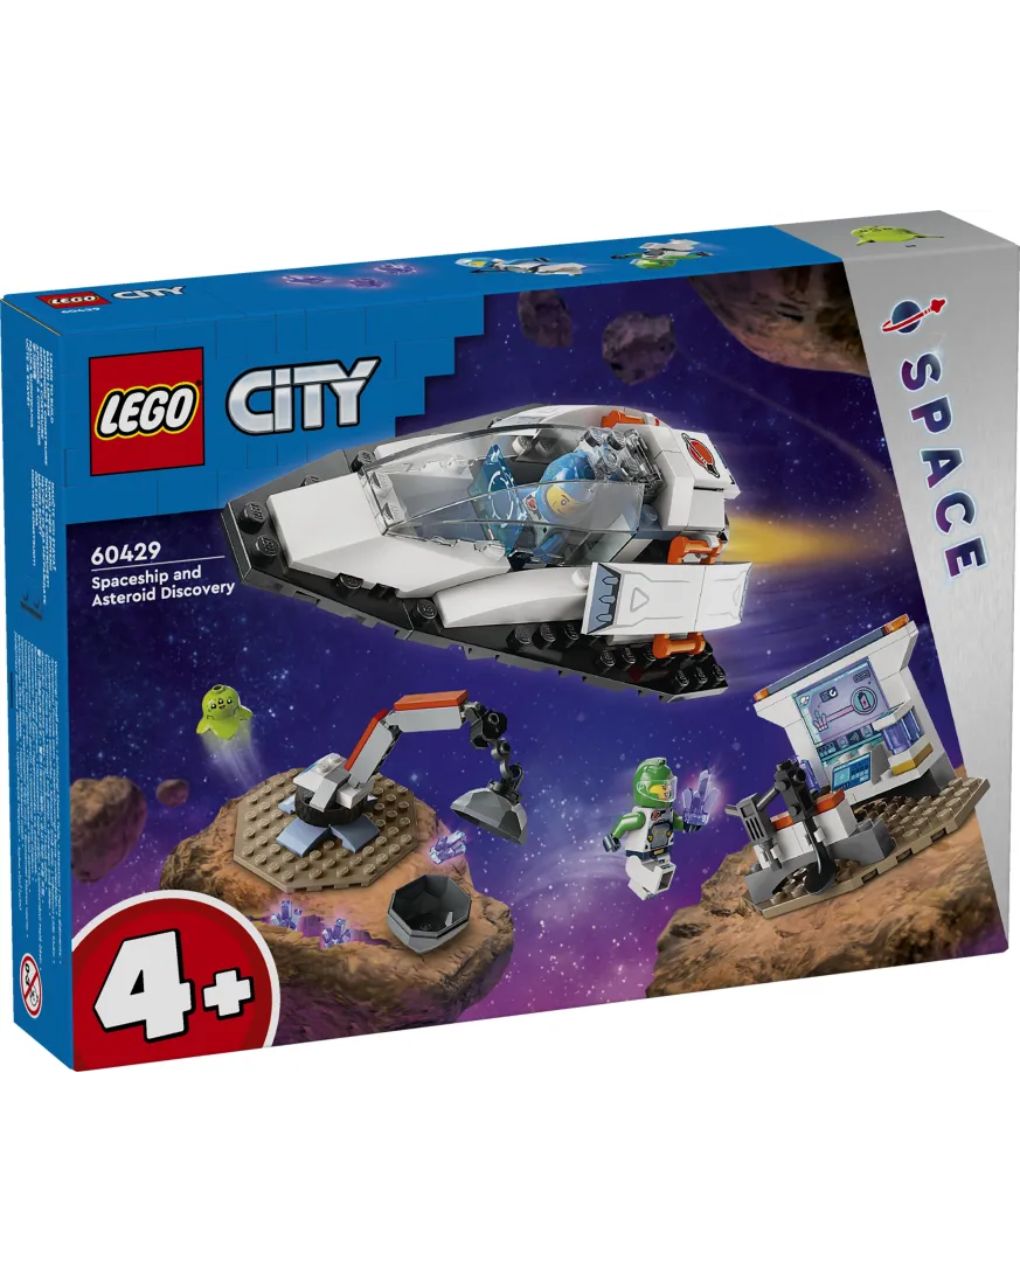 Lego city spaceship & asteroid discovery 60429 - Lego